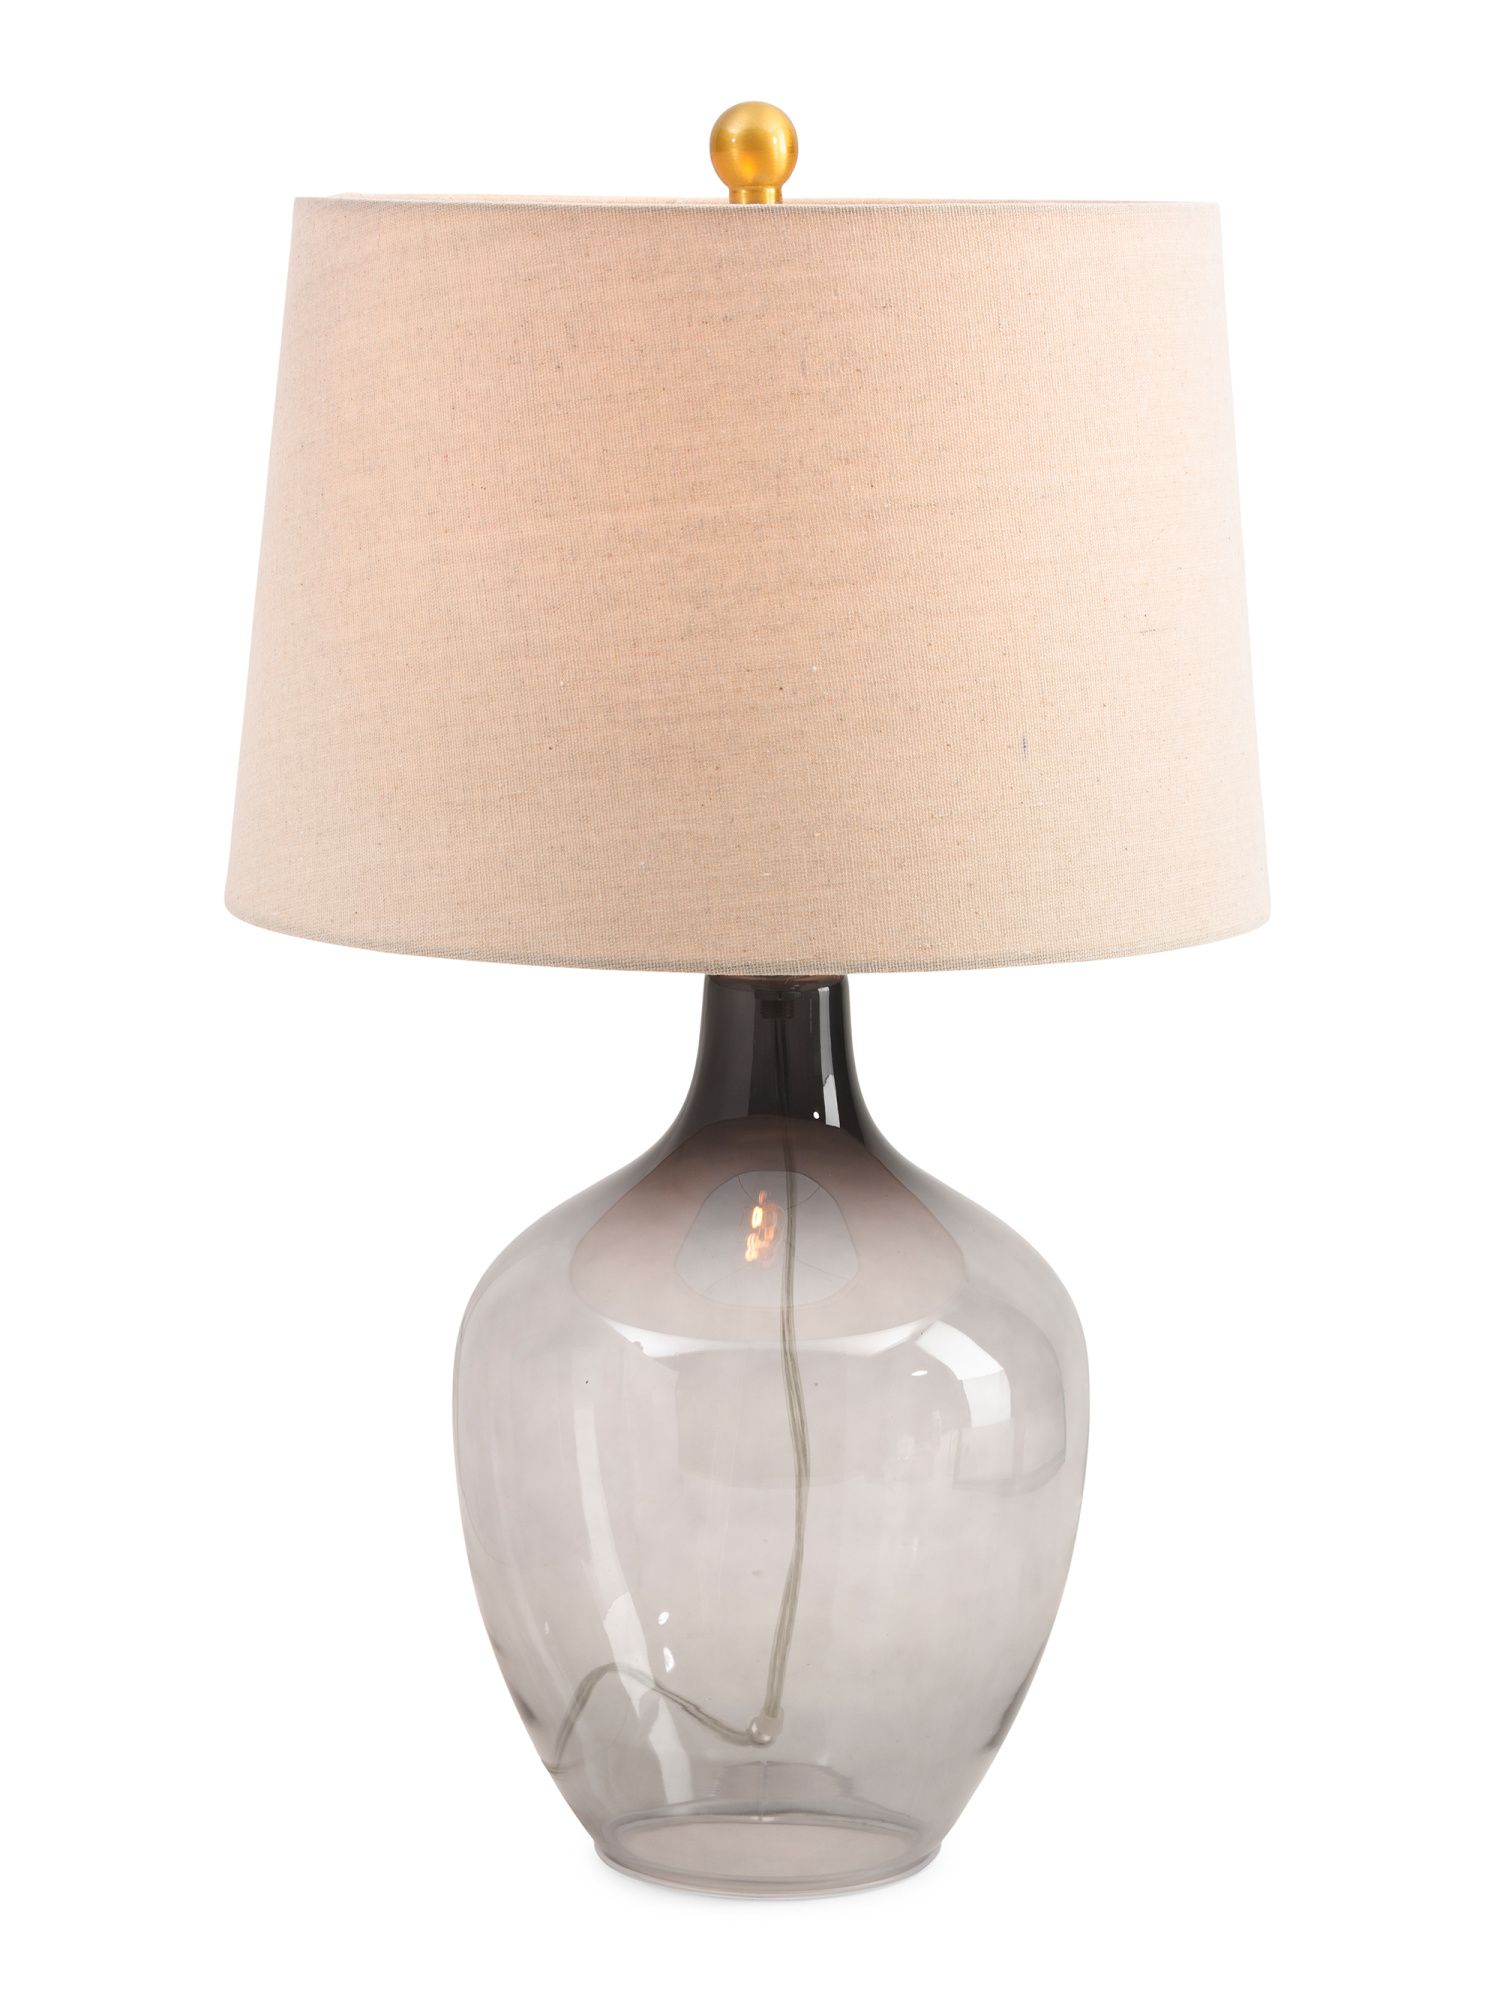 Larzen Table Lamp | TJ Maxx